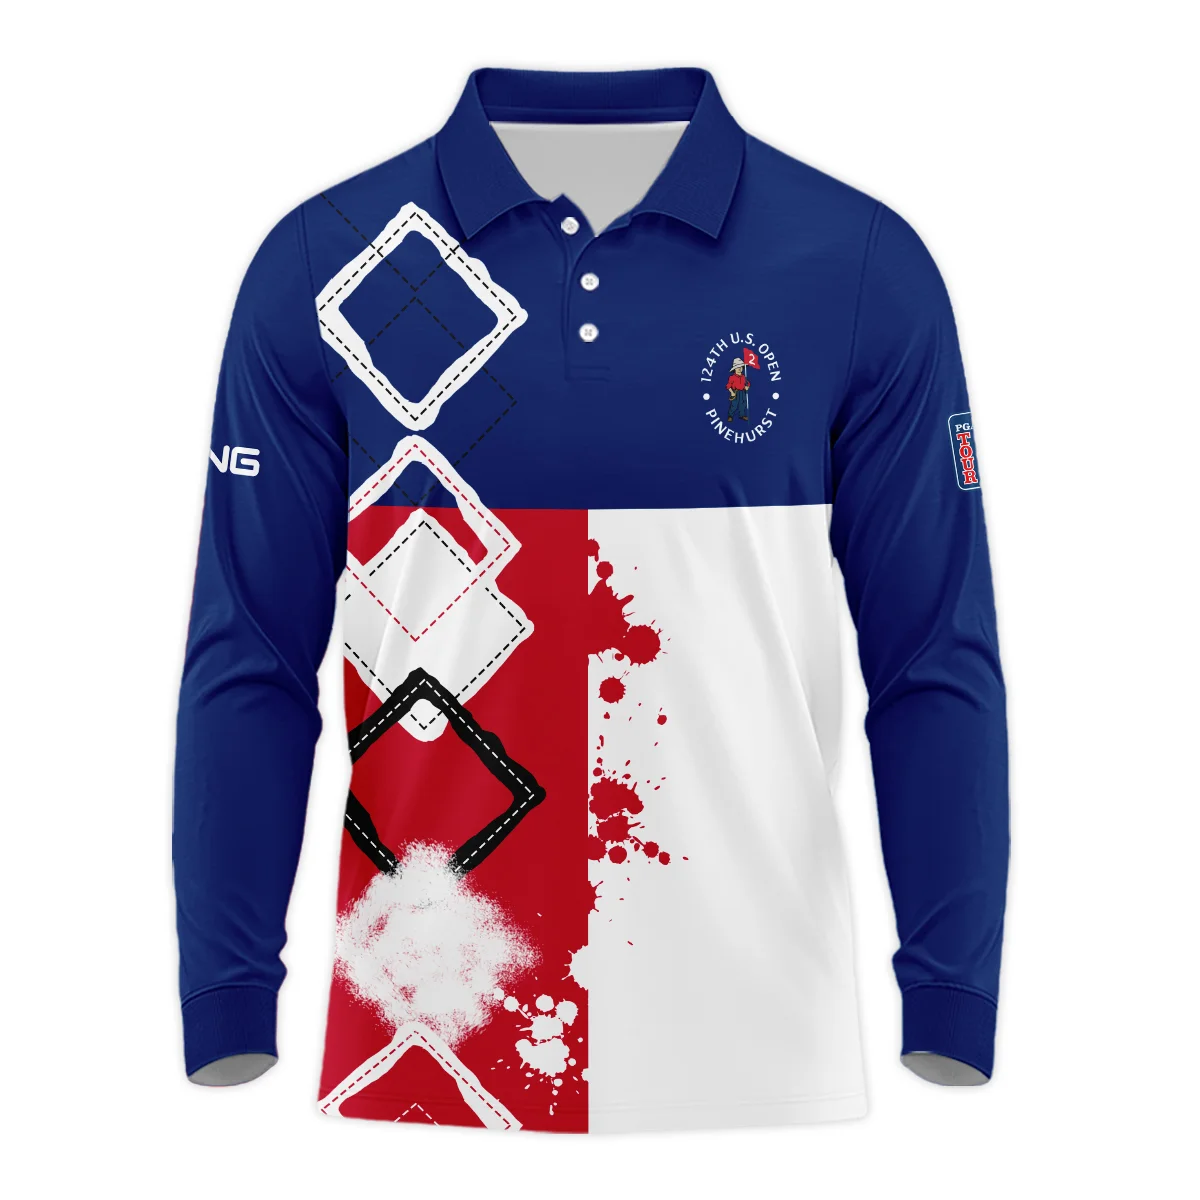 124th U.S. Open Pinehurst Ping Unisex Sweatshirt Blue Red White Pattern Grunge All Over Print Sweatshirt